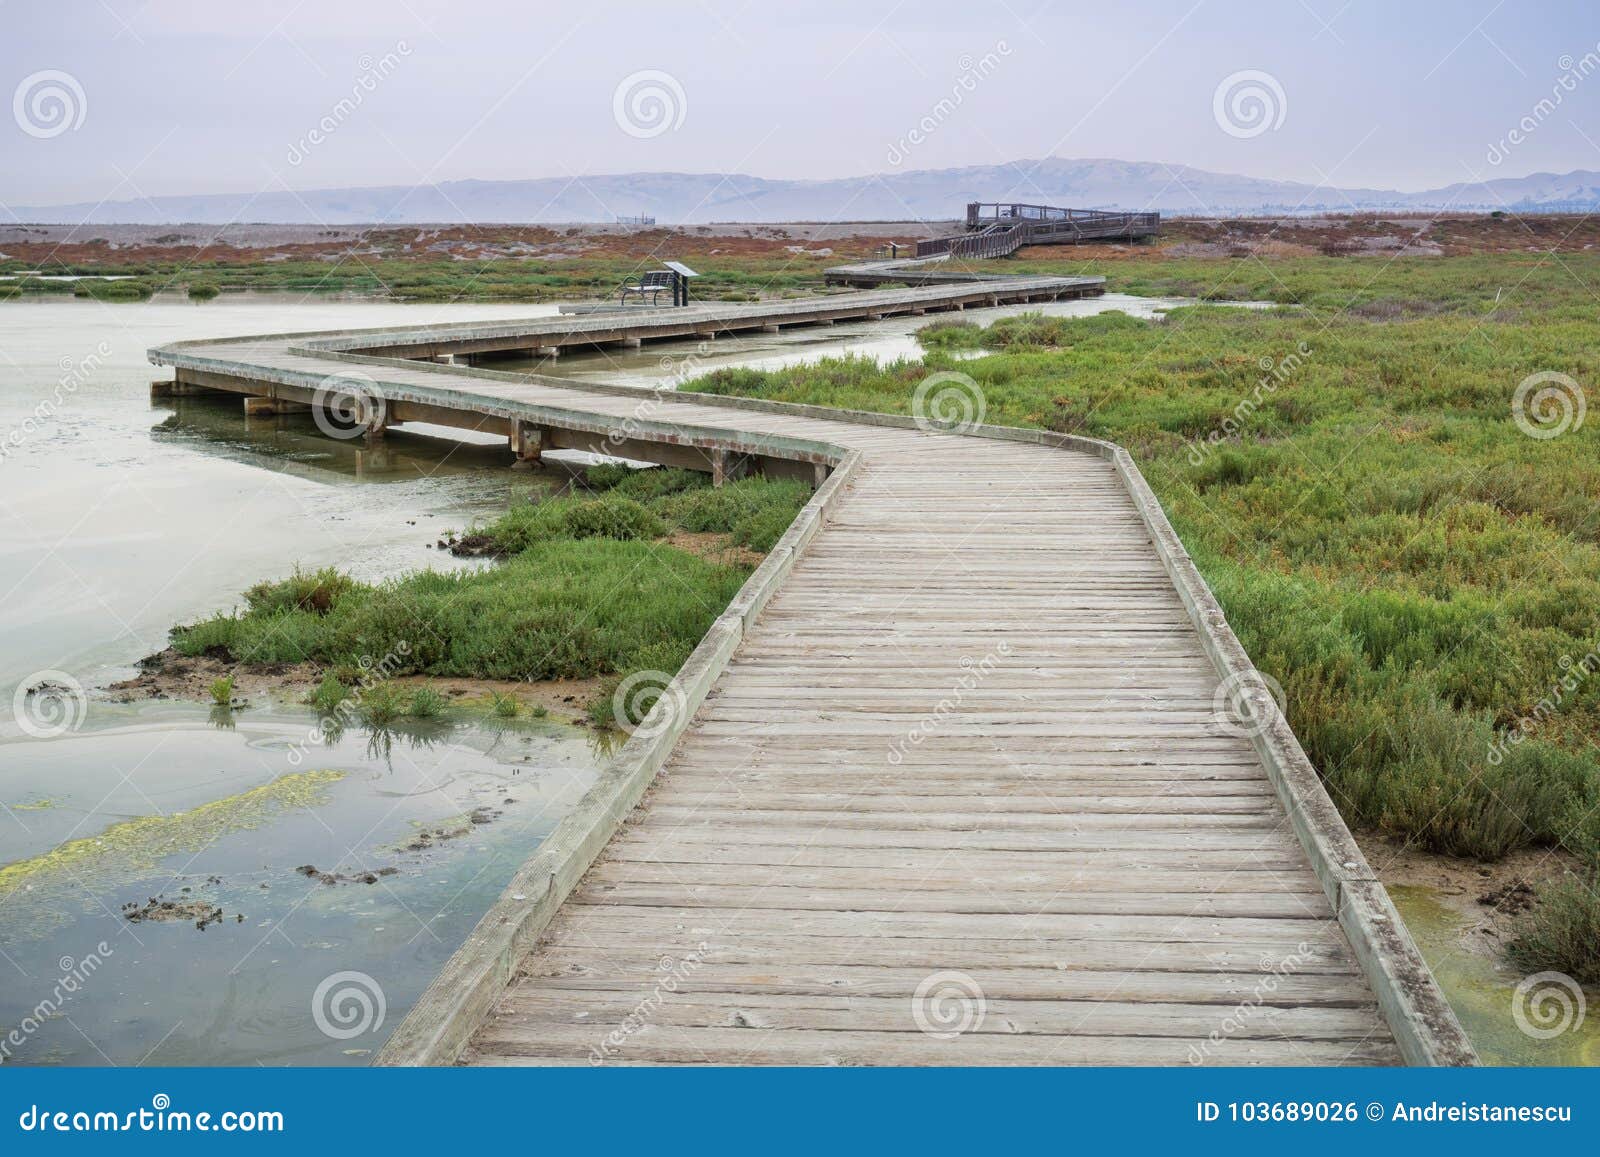 boardwalk through alviso marsh on a cloudy day